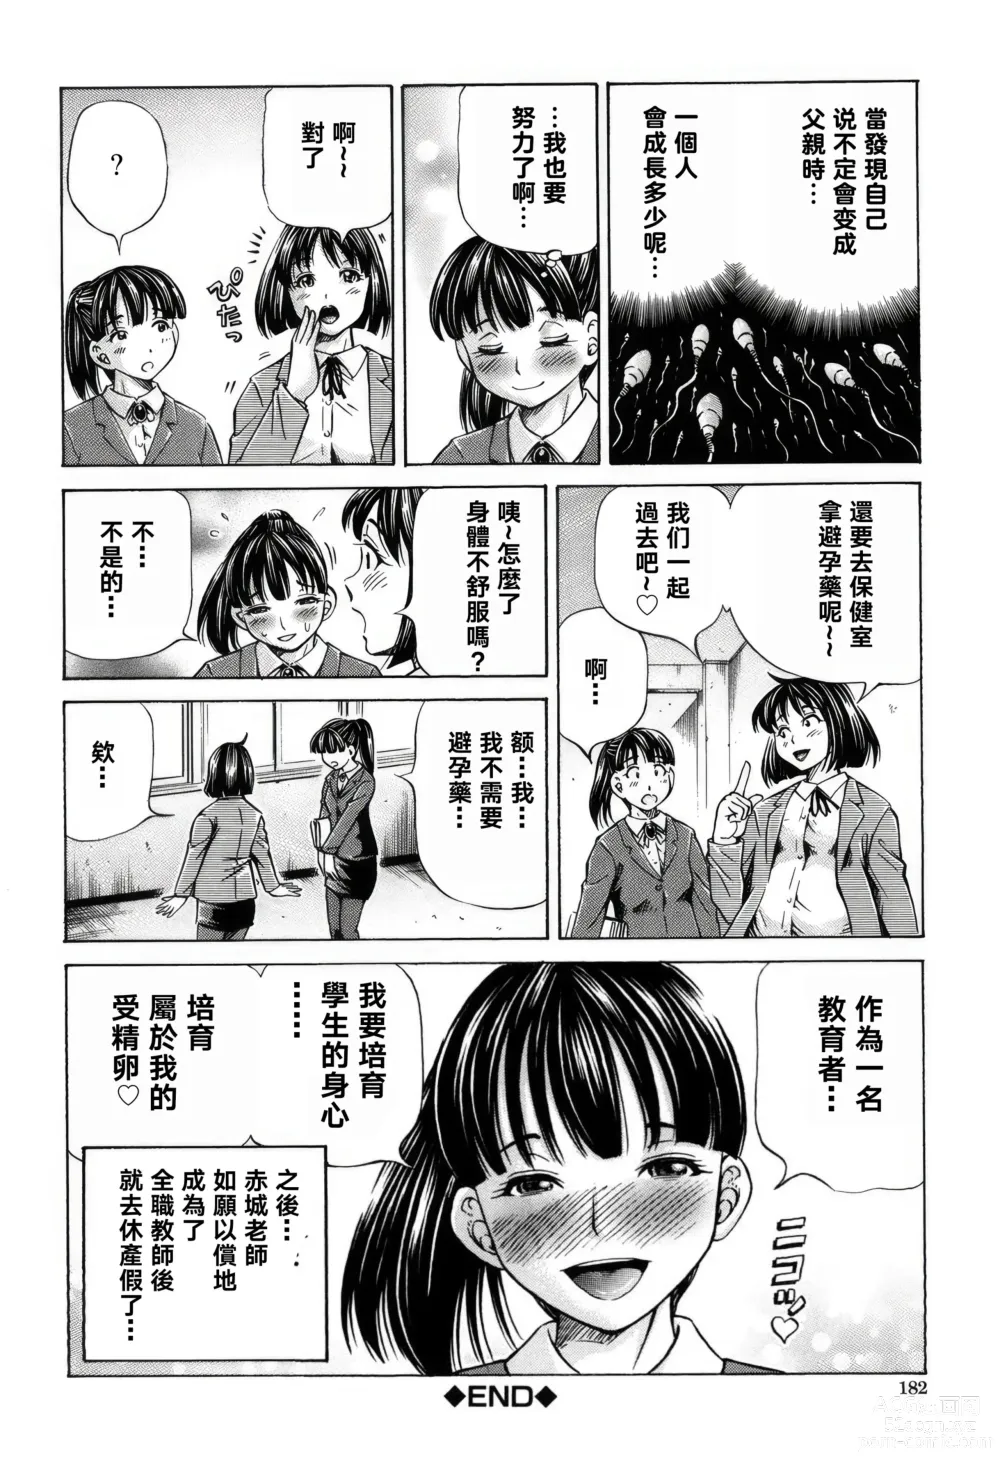 Page 182 of manga Cross-Breeding